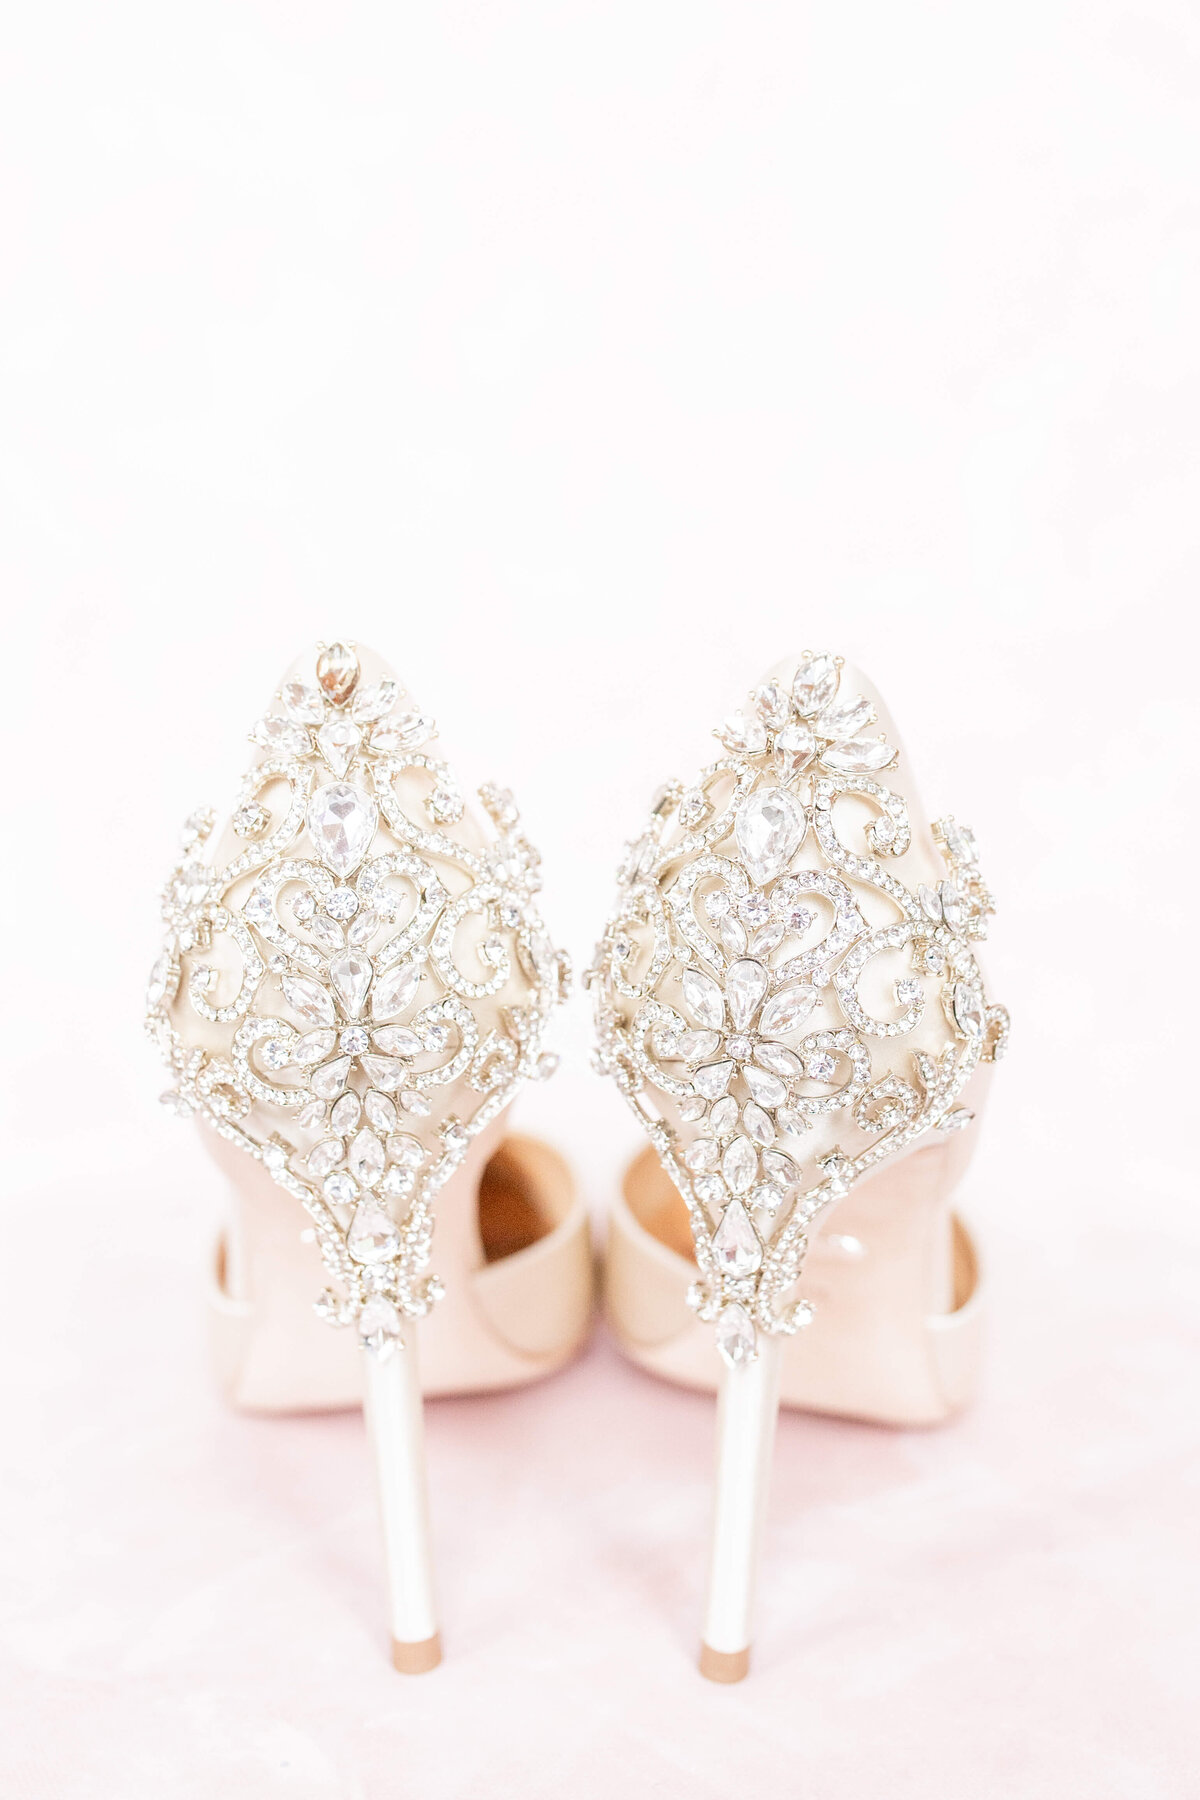 Bride-shoes-for-wedding-inspiration-Bethany-Lane-Photography